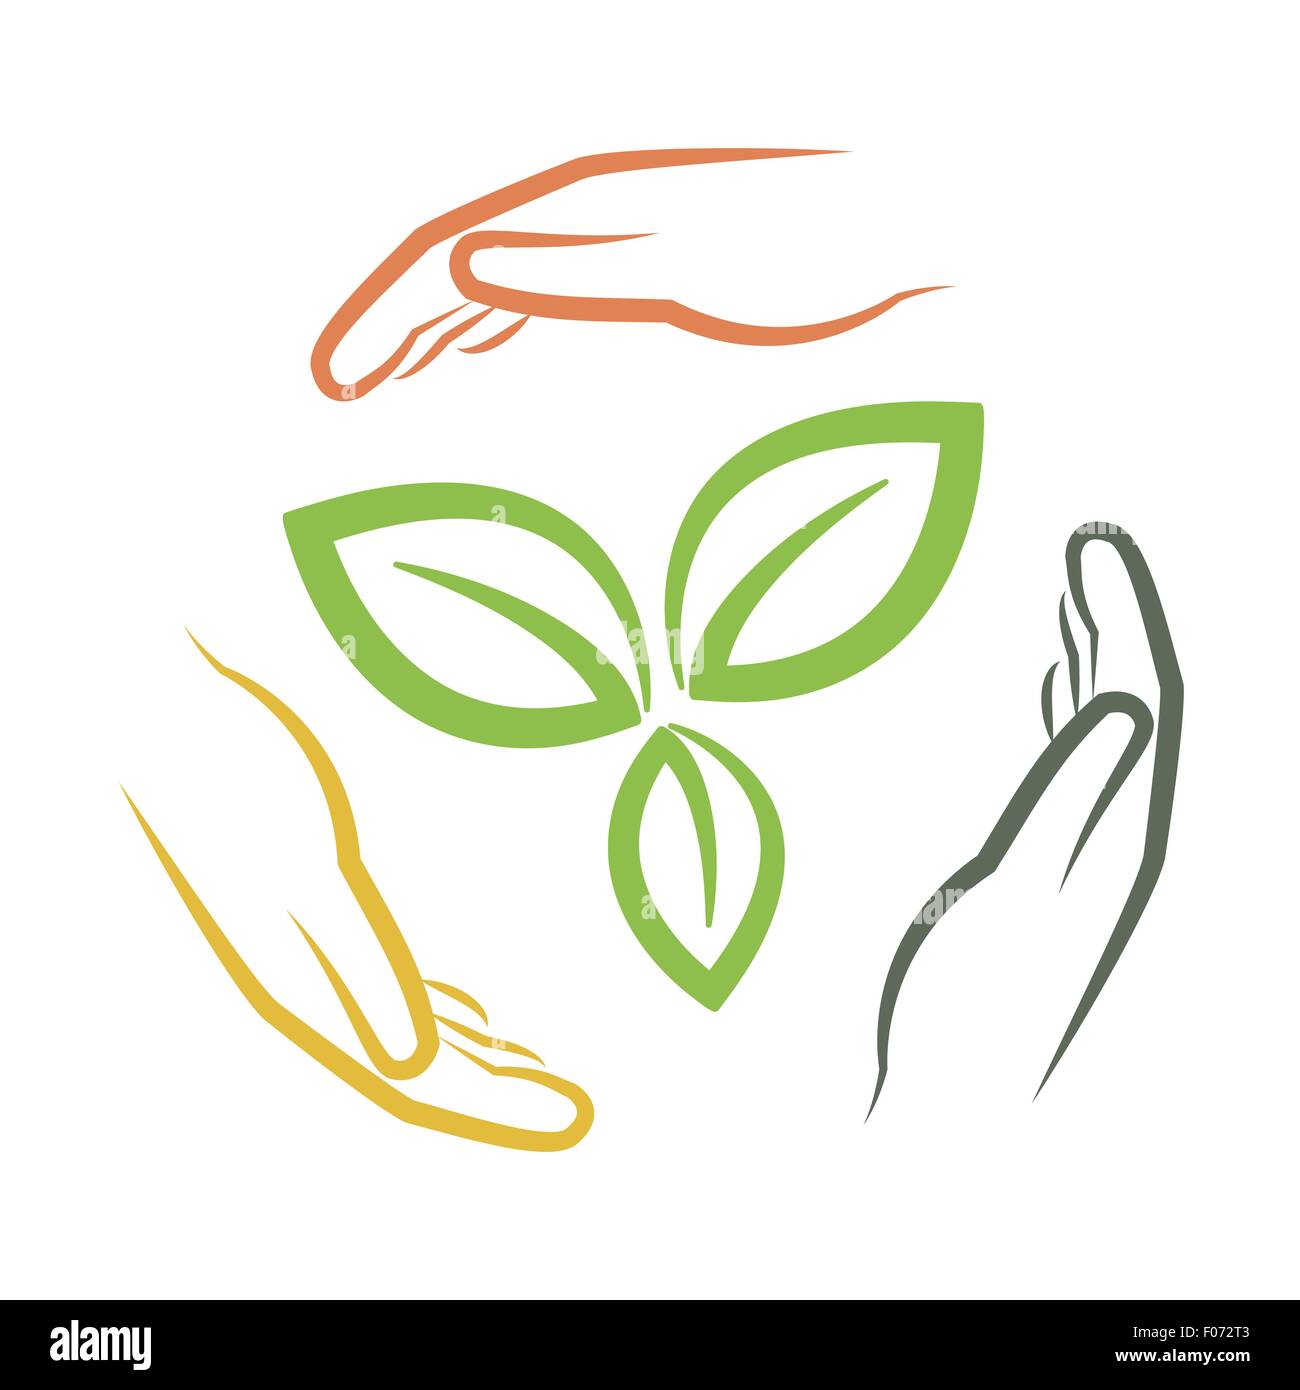 Hände um grüne Blätter als Multi-nationalen Umwelt-Konzept-Vektor-illustration Stock Vektor